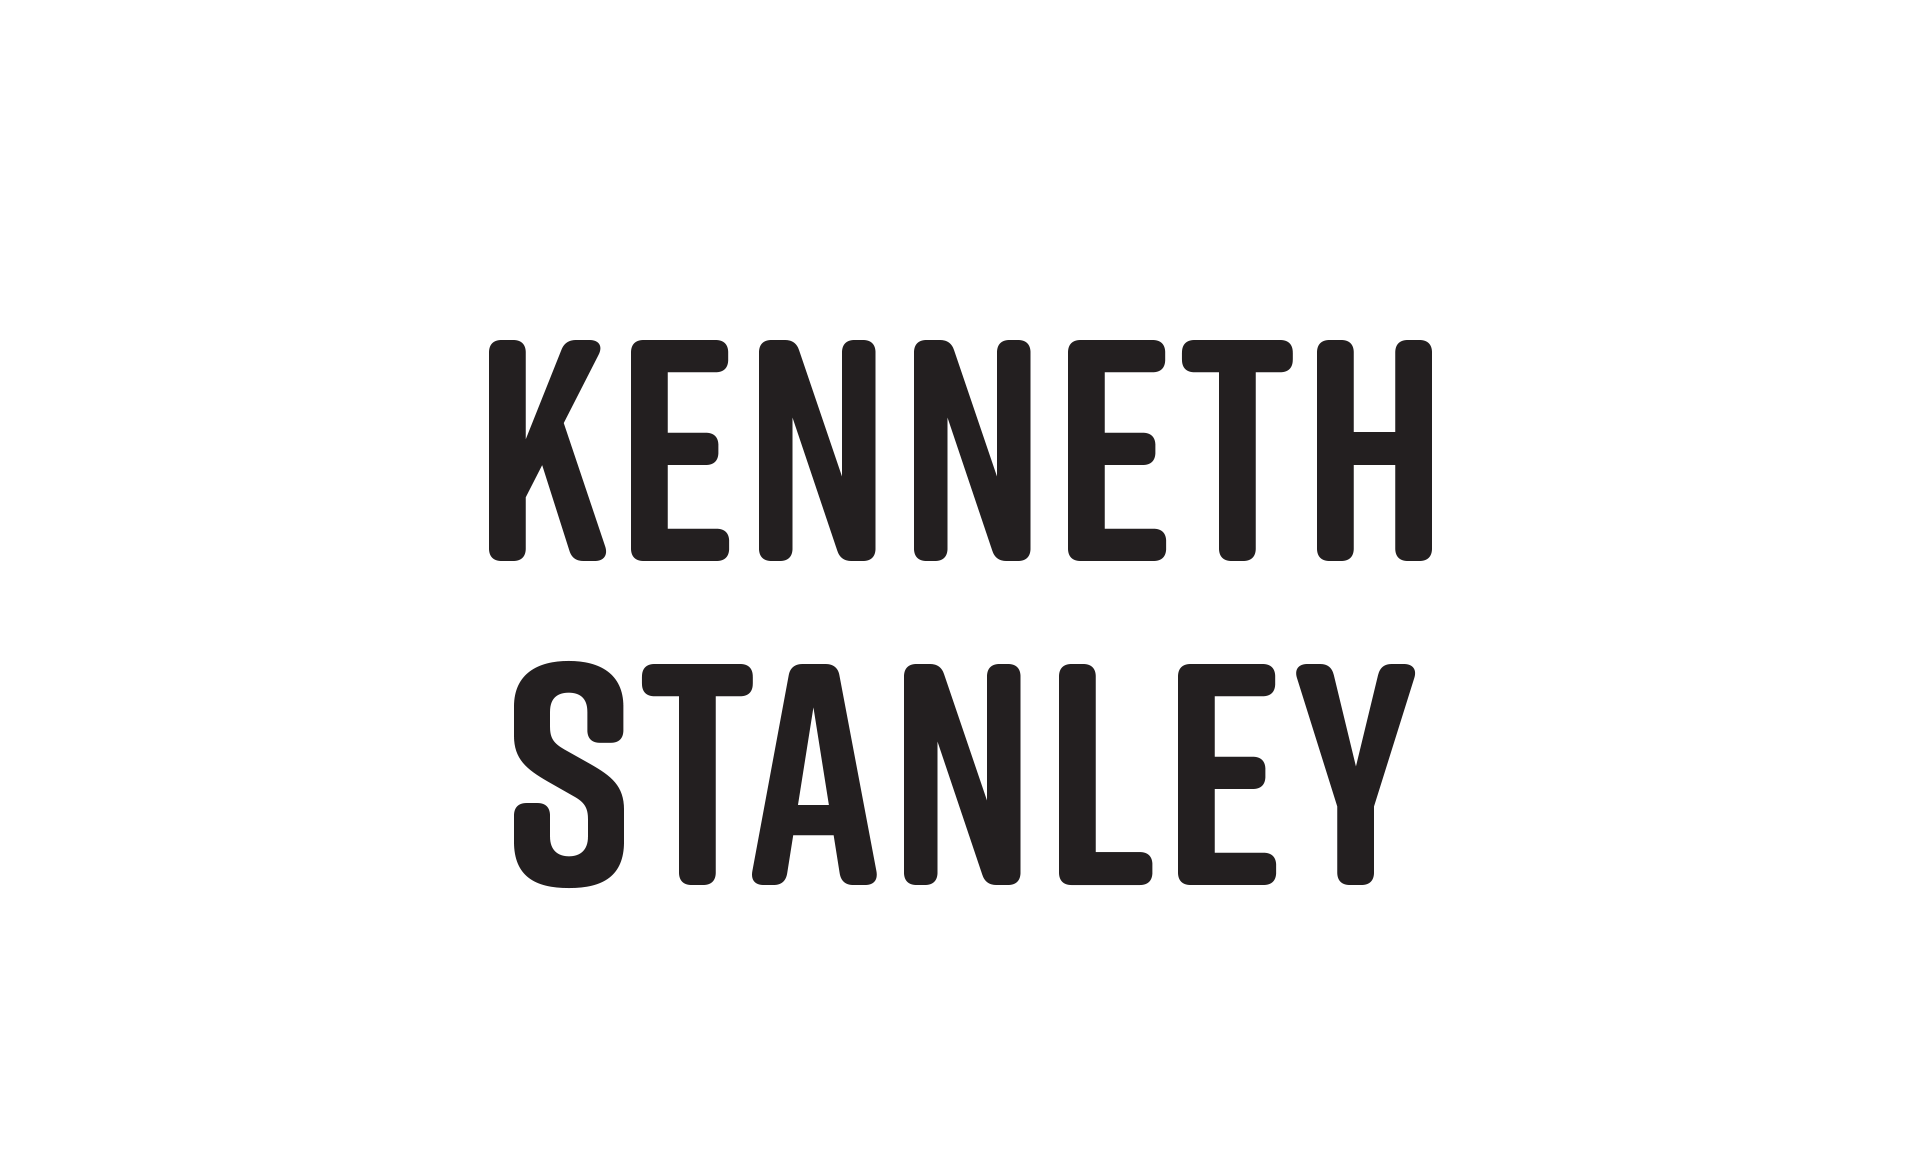  Kenneth Stanley 